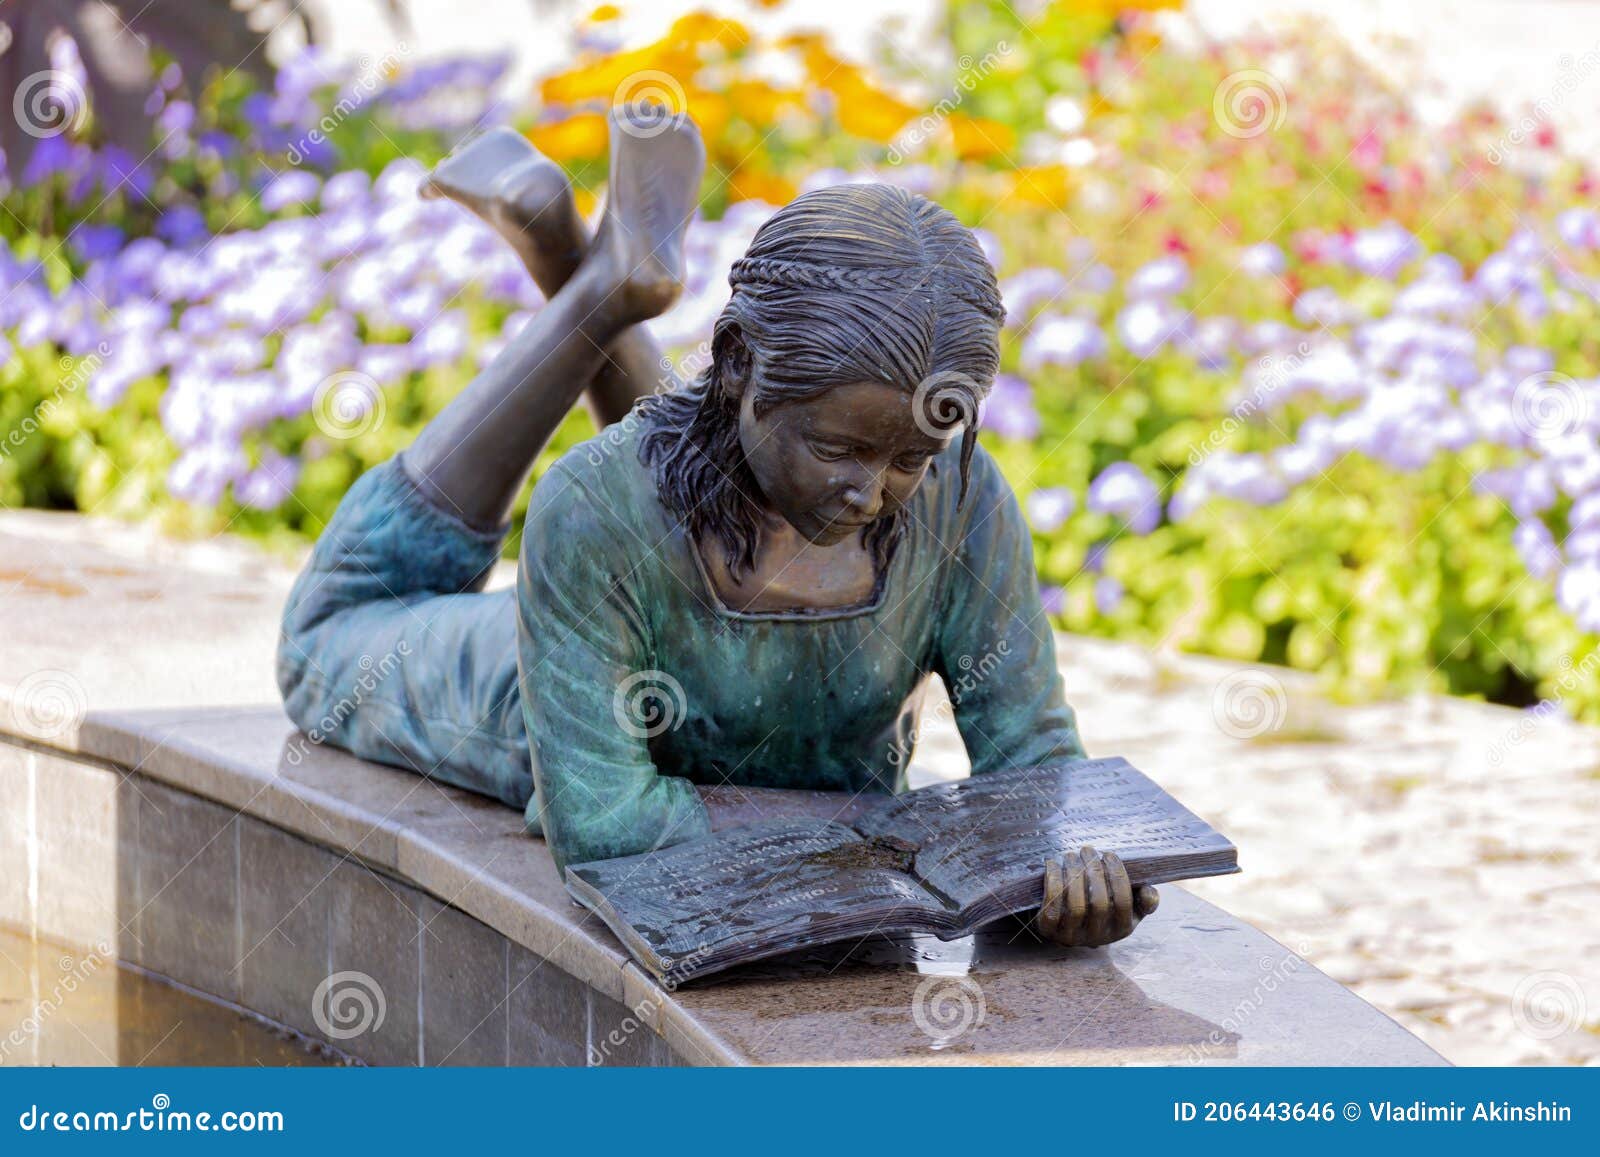 https://thumbs.dreamstime.com/z/bronze-sculpture-girl-lying-bench-reading-book-p-bazhova-summer-day-russia-zlatoust-august-206443646.jpg